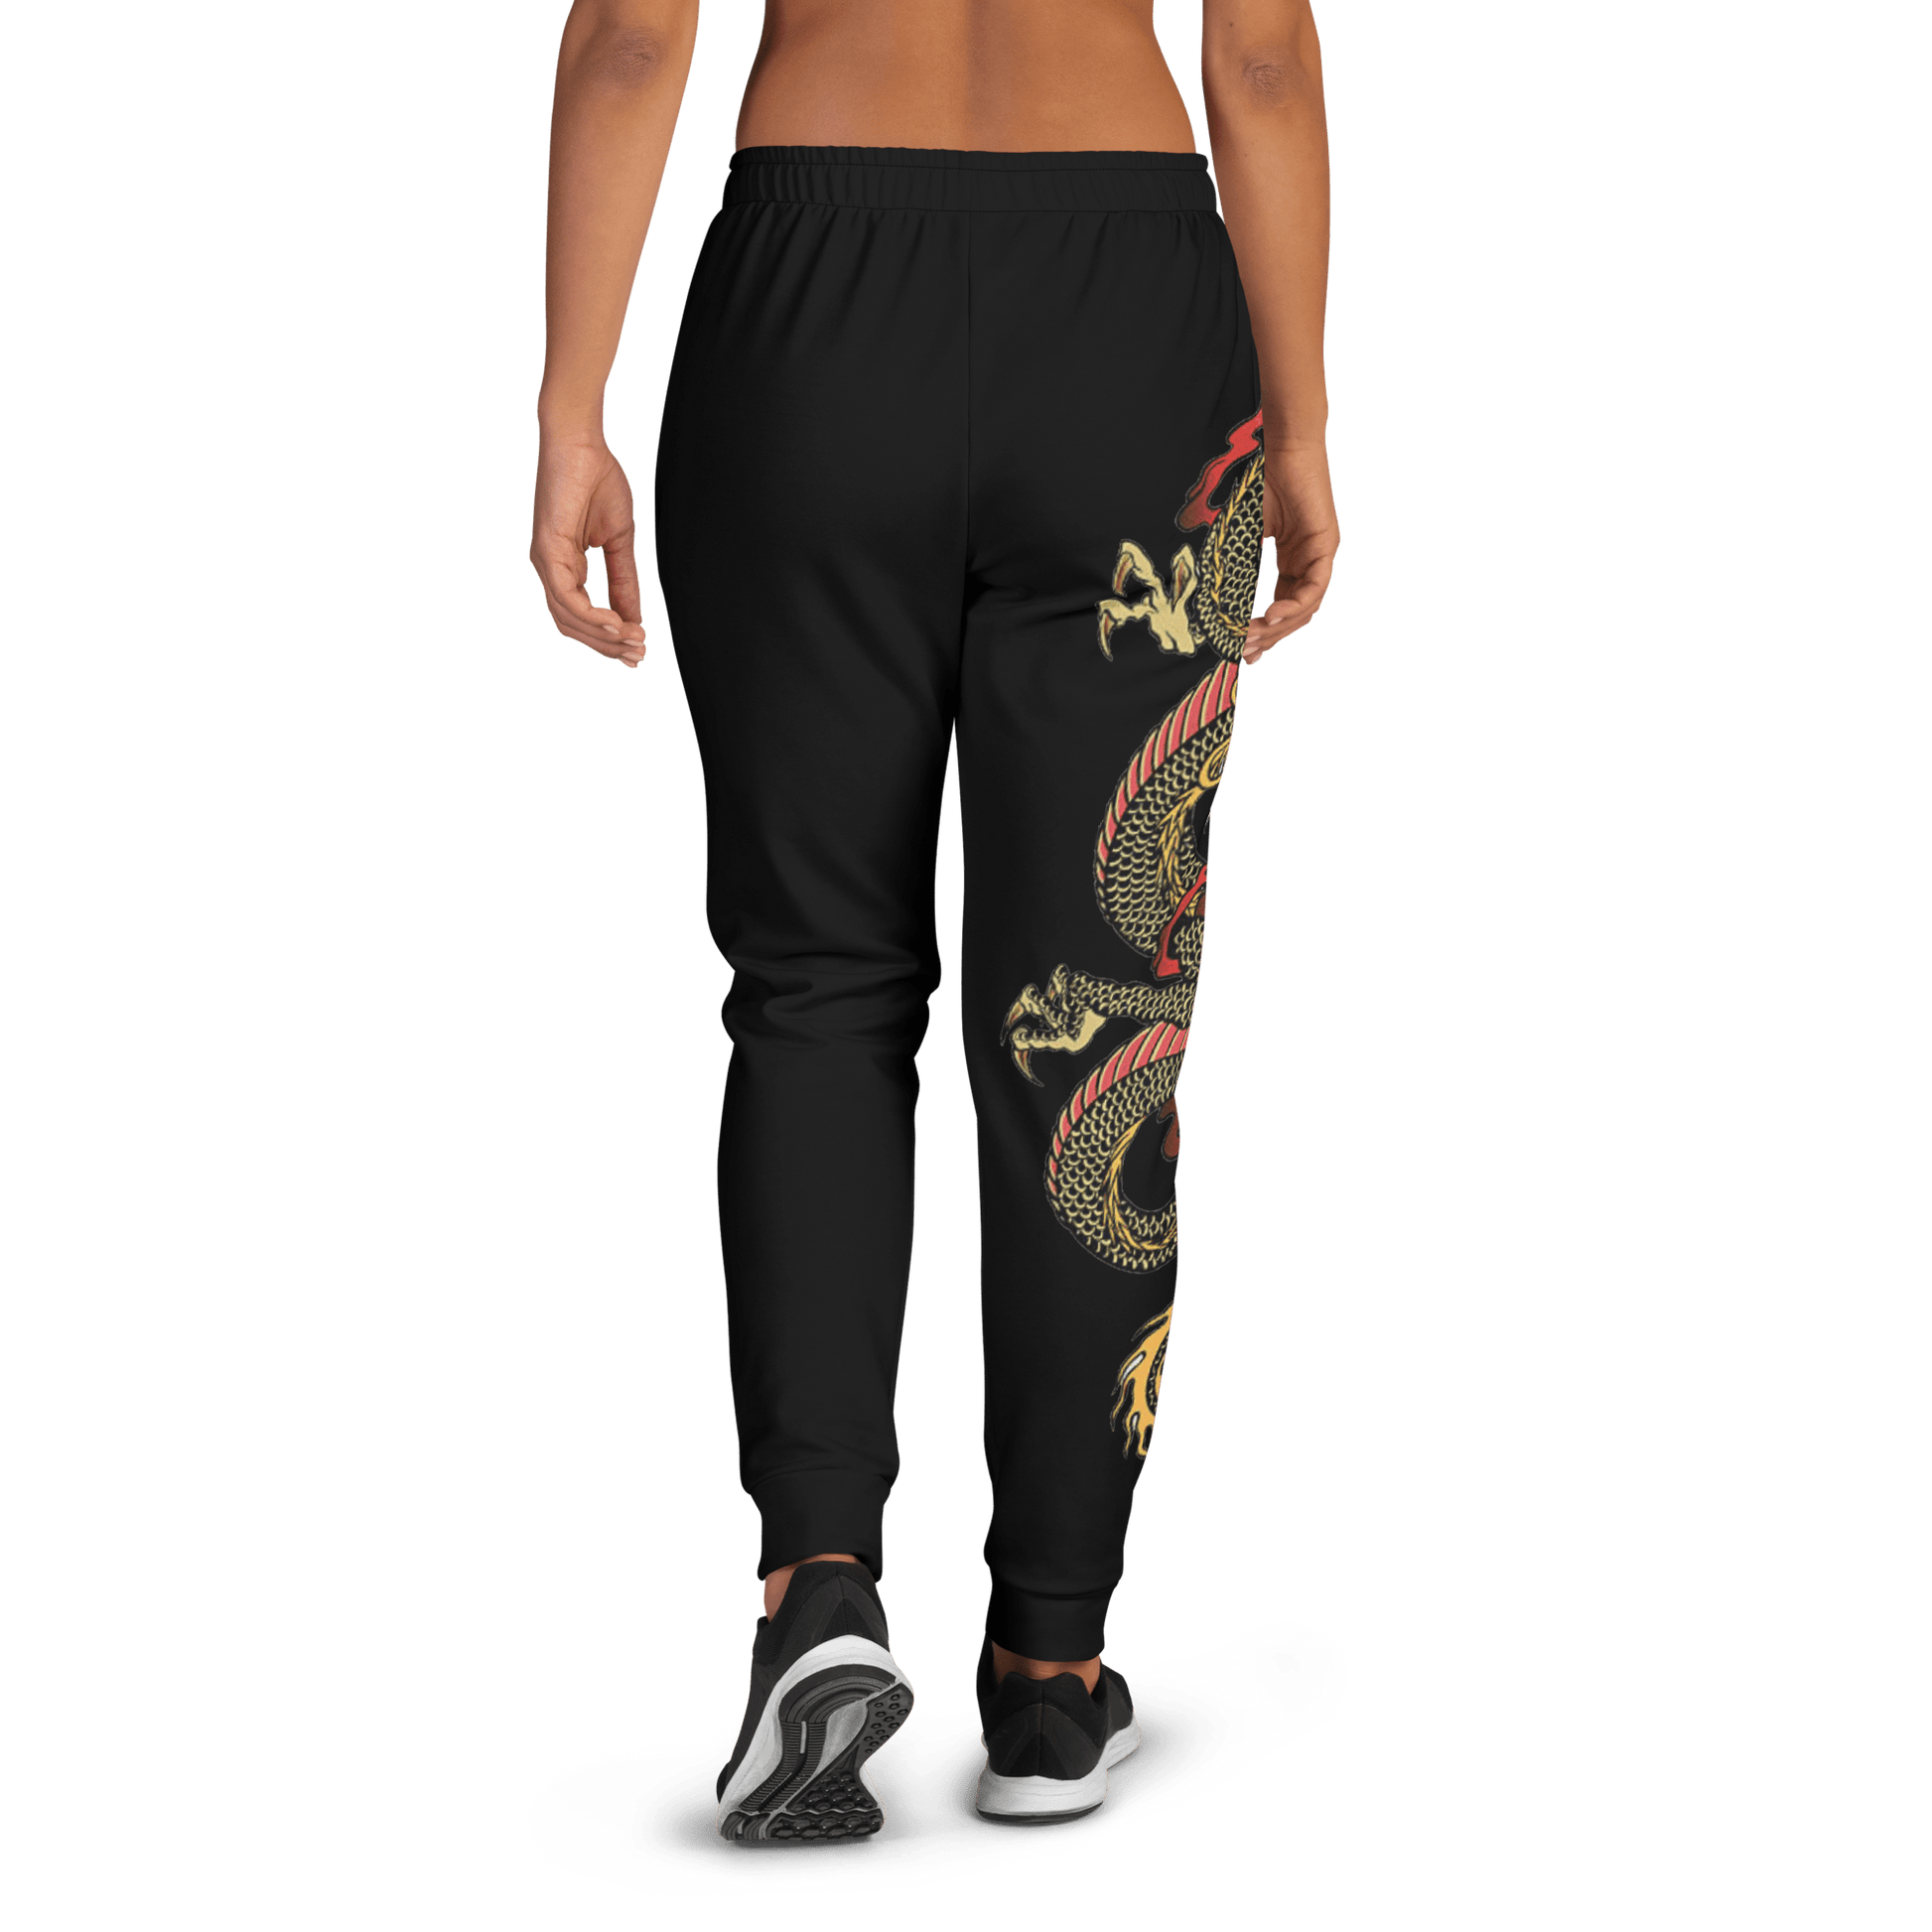 ElysMode Pants Dragon Black Sweatpants